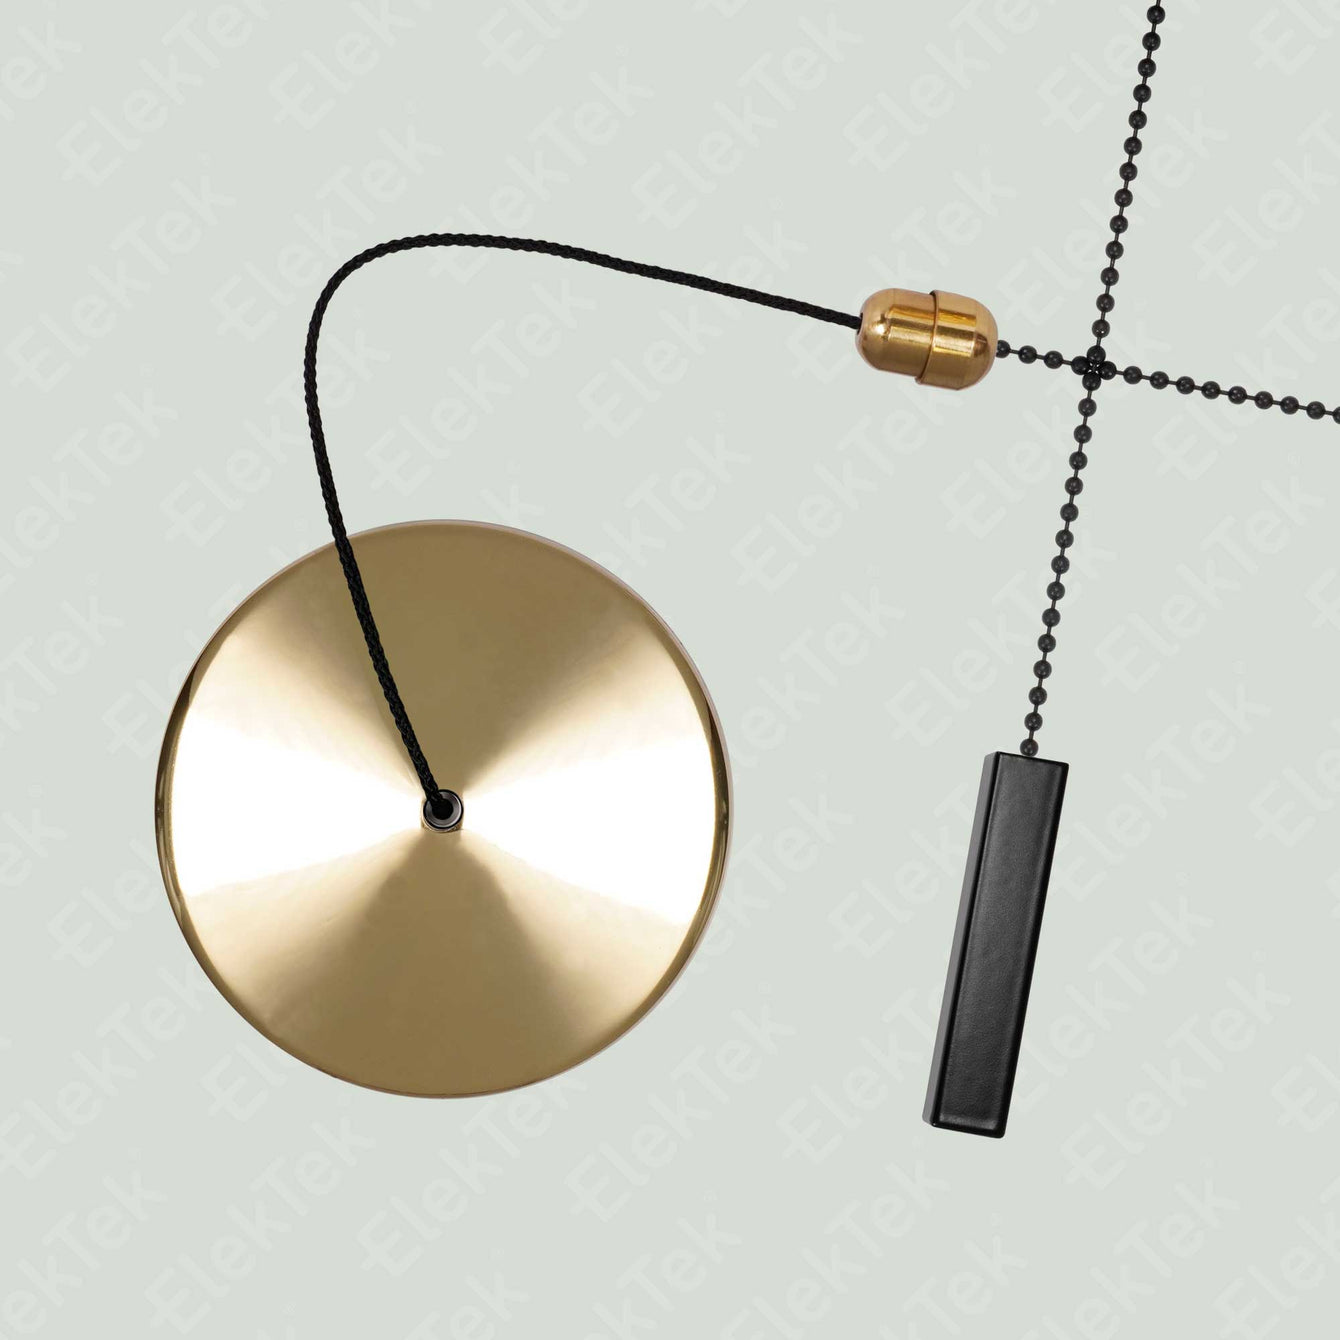 ElekTek Premium Brass Bathroom Light Pull Cord Switch Kit with Pull Chain Handle Grey Blue Disc / Brass